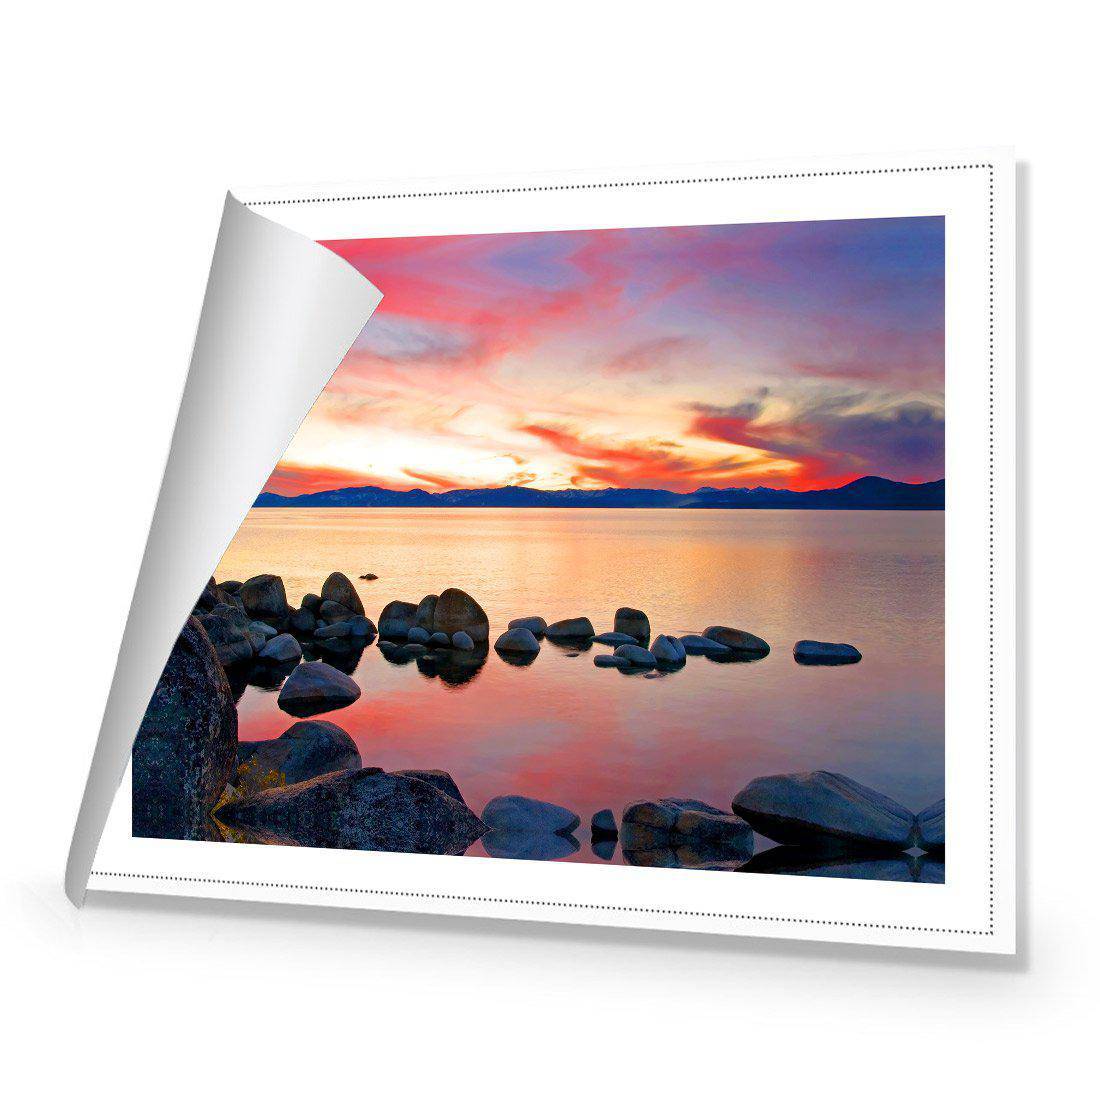 Sunset Calm Waters Canvas Art-Canvas-Wall Art Designs-45x30cm-Rolled Canvas-Wall Art Designs